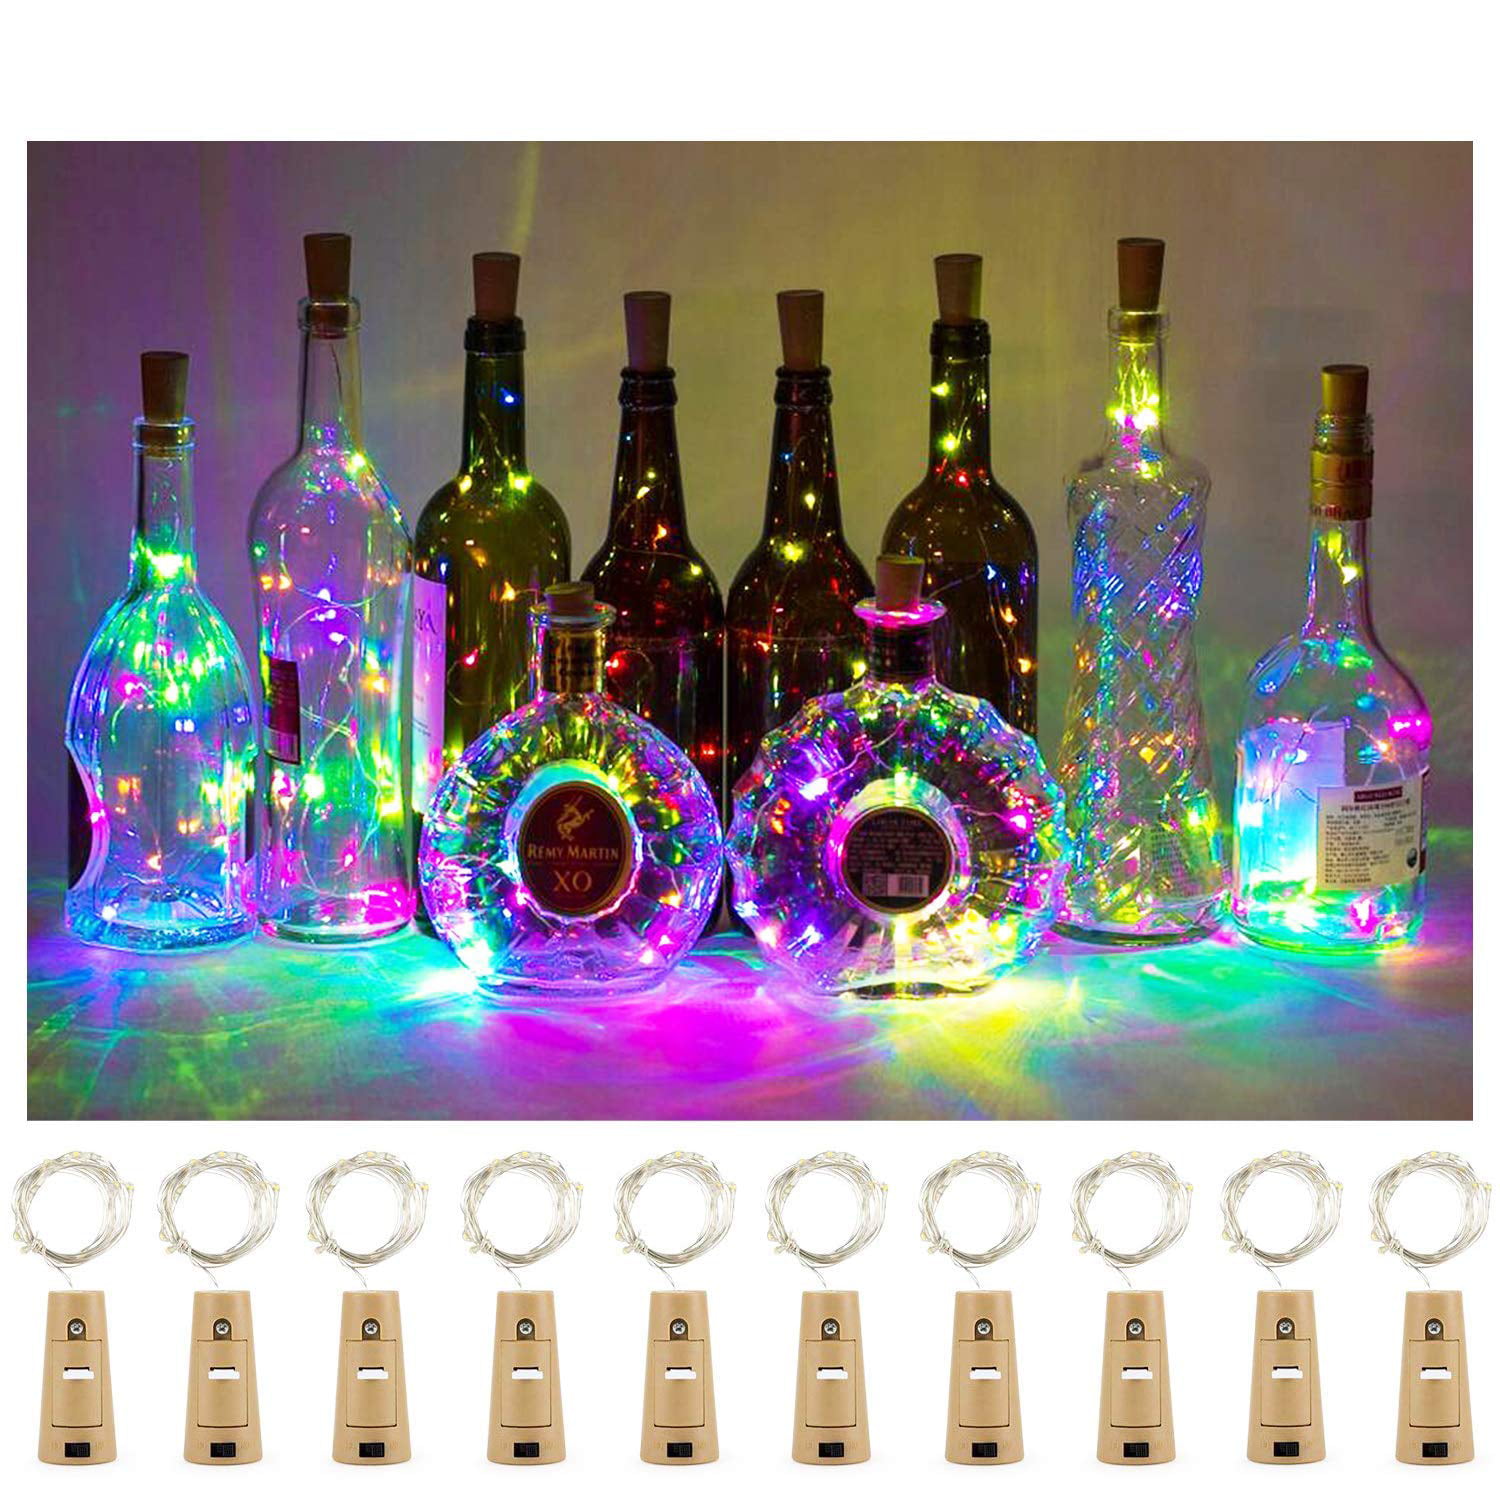 LED Glass Wine Bottle Light up Home Decor Sisters Gift Novelty Unique Gift 